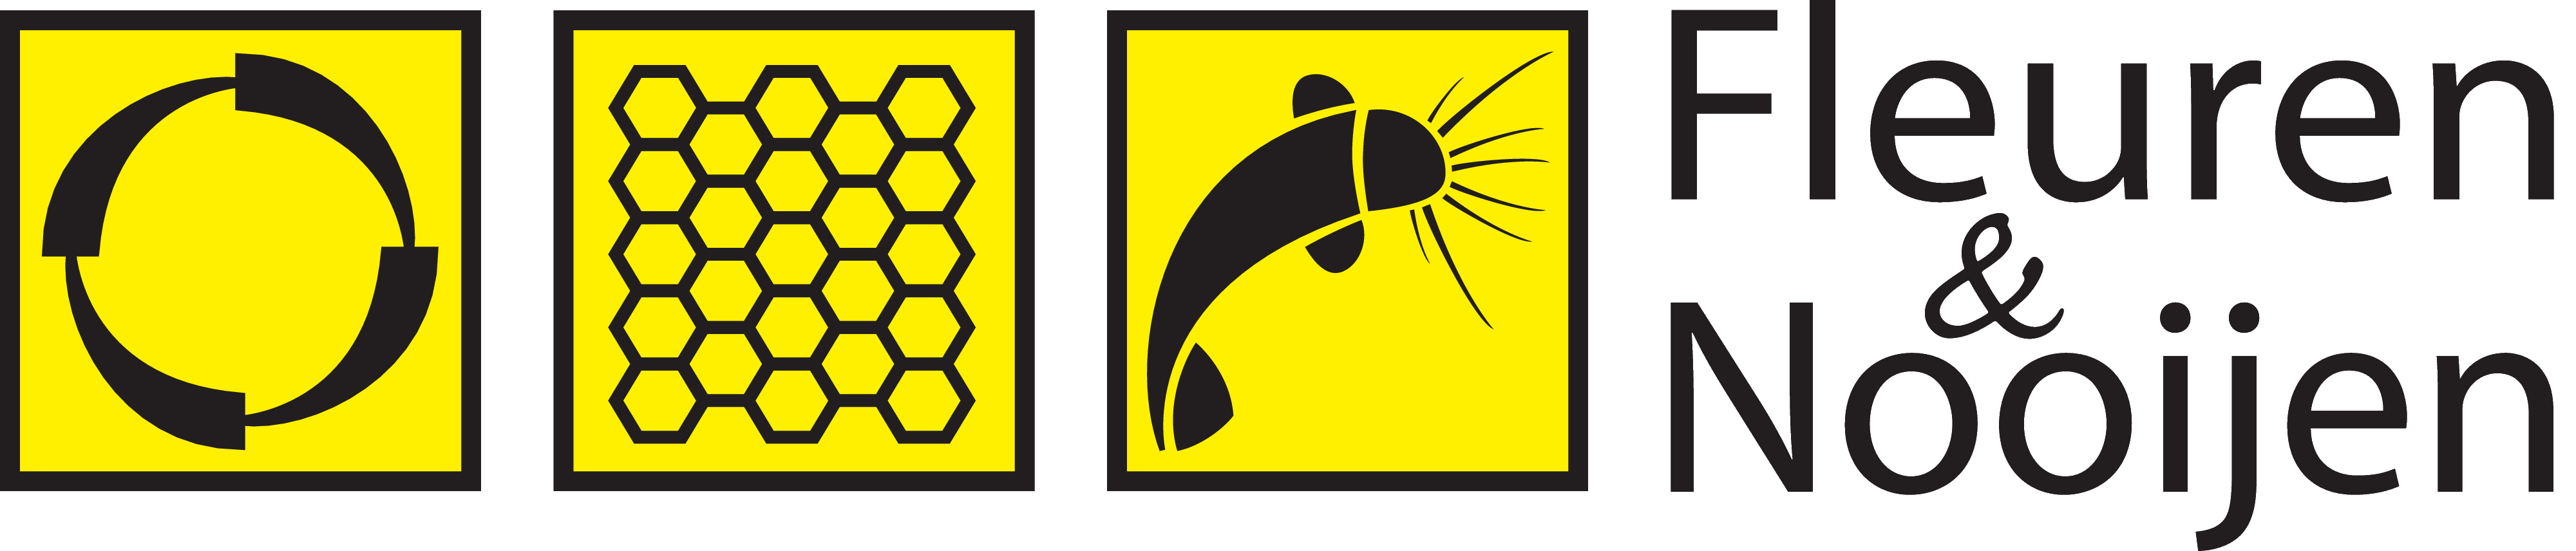 Fleuren & Nooijen logo